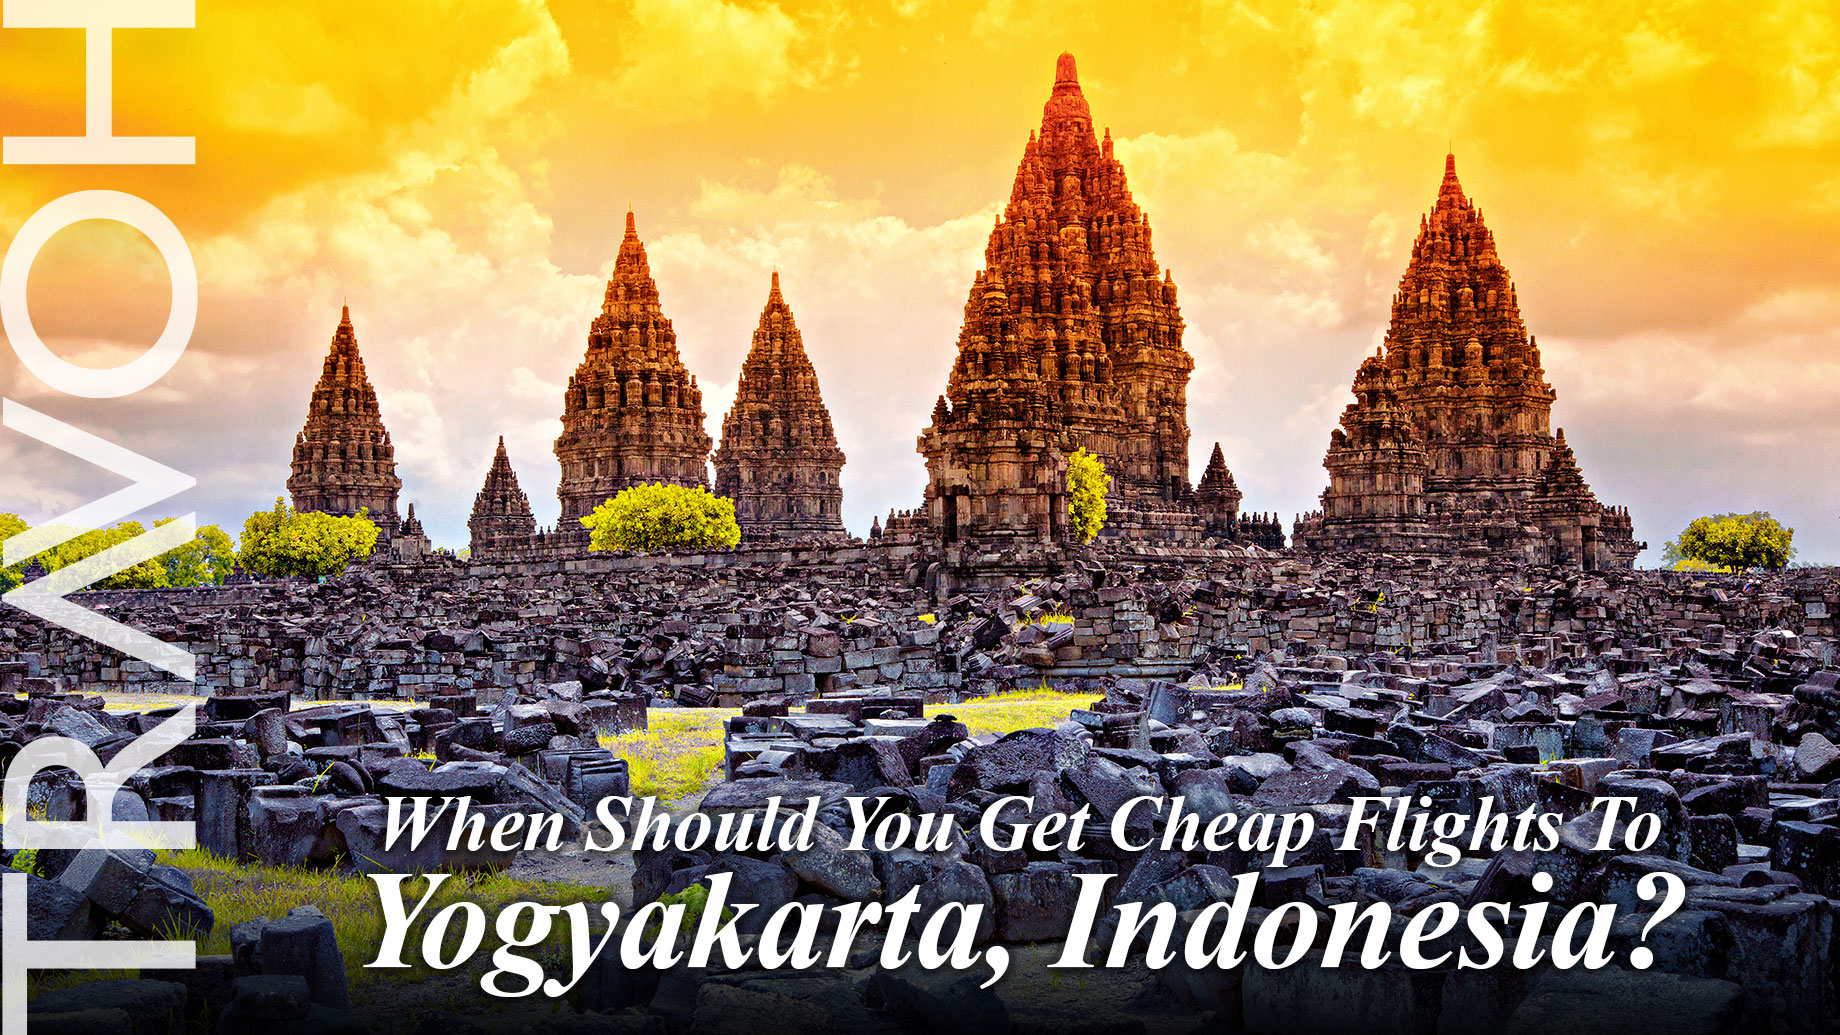 When Should You Get Cheap Flights To Yogyakarta, Indonesia?